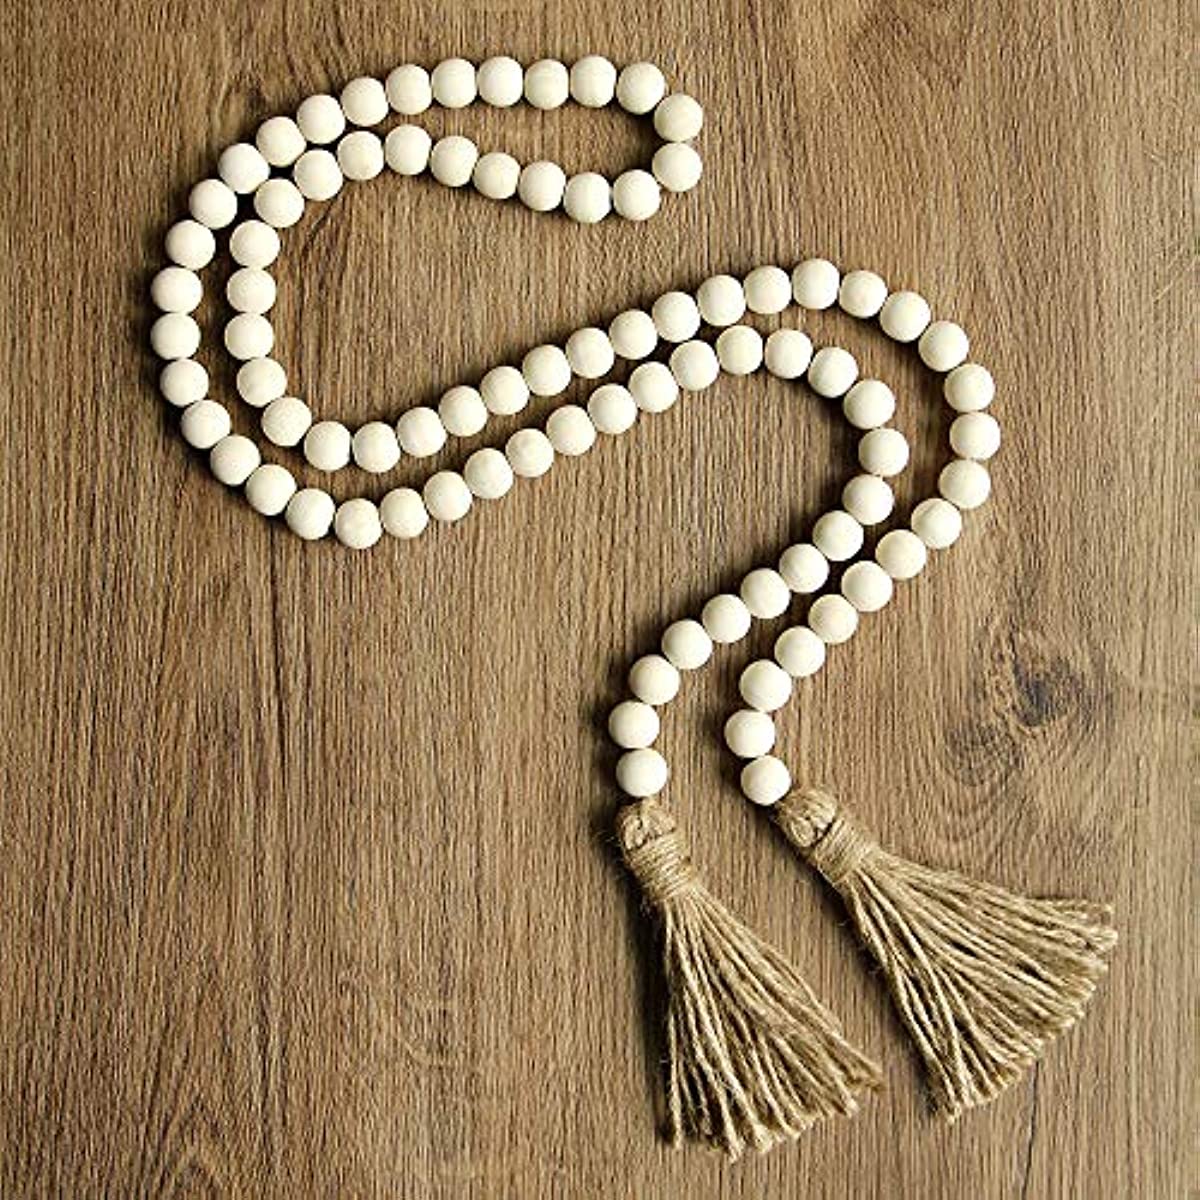 Boho Decor Wood Beads Garland, 2 Pack 58 Inch Wooden Beads